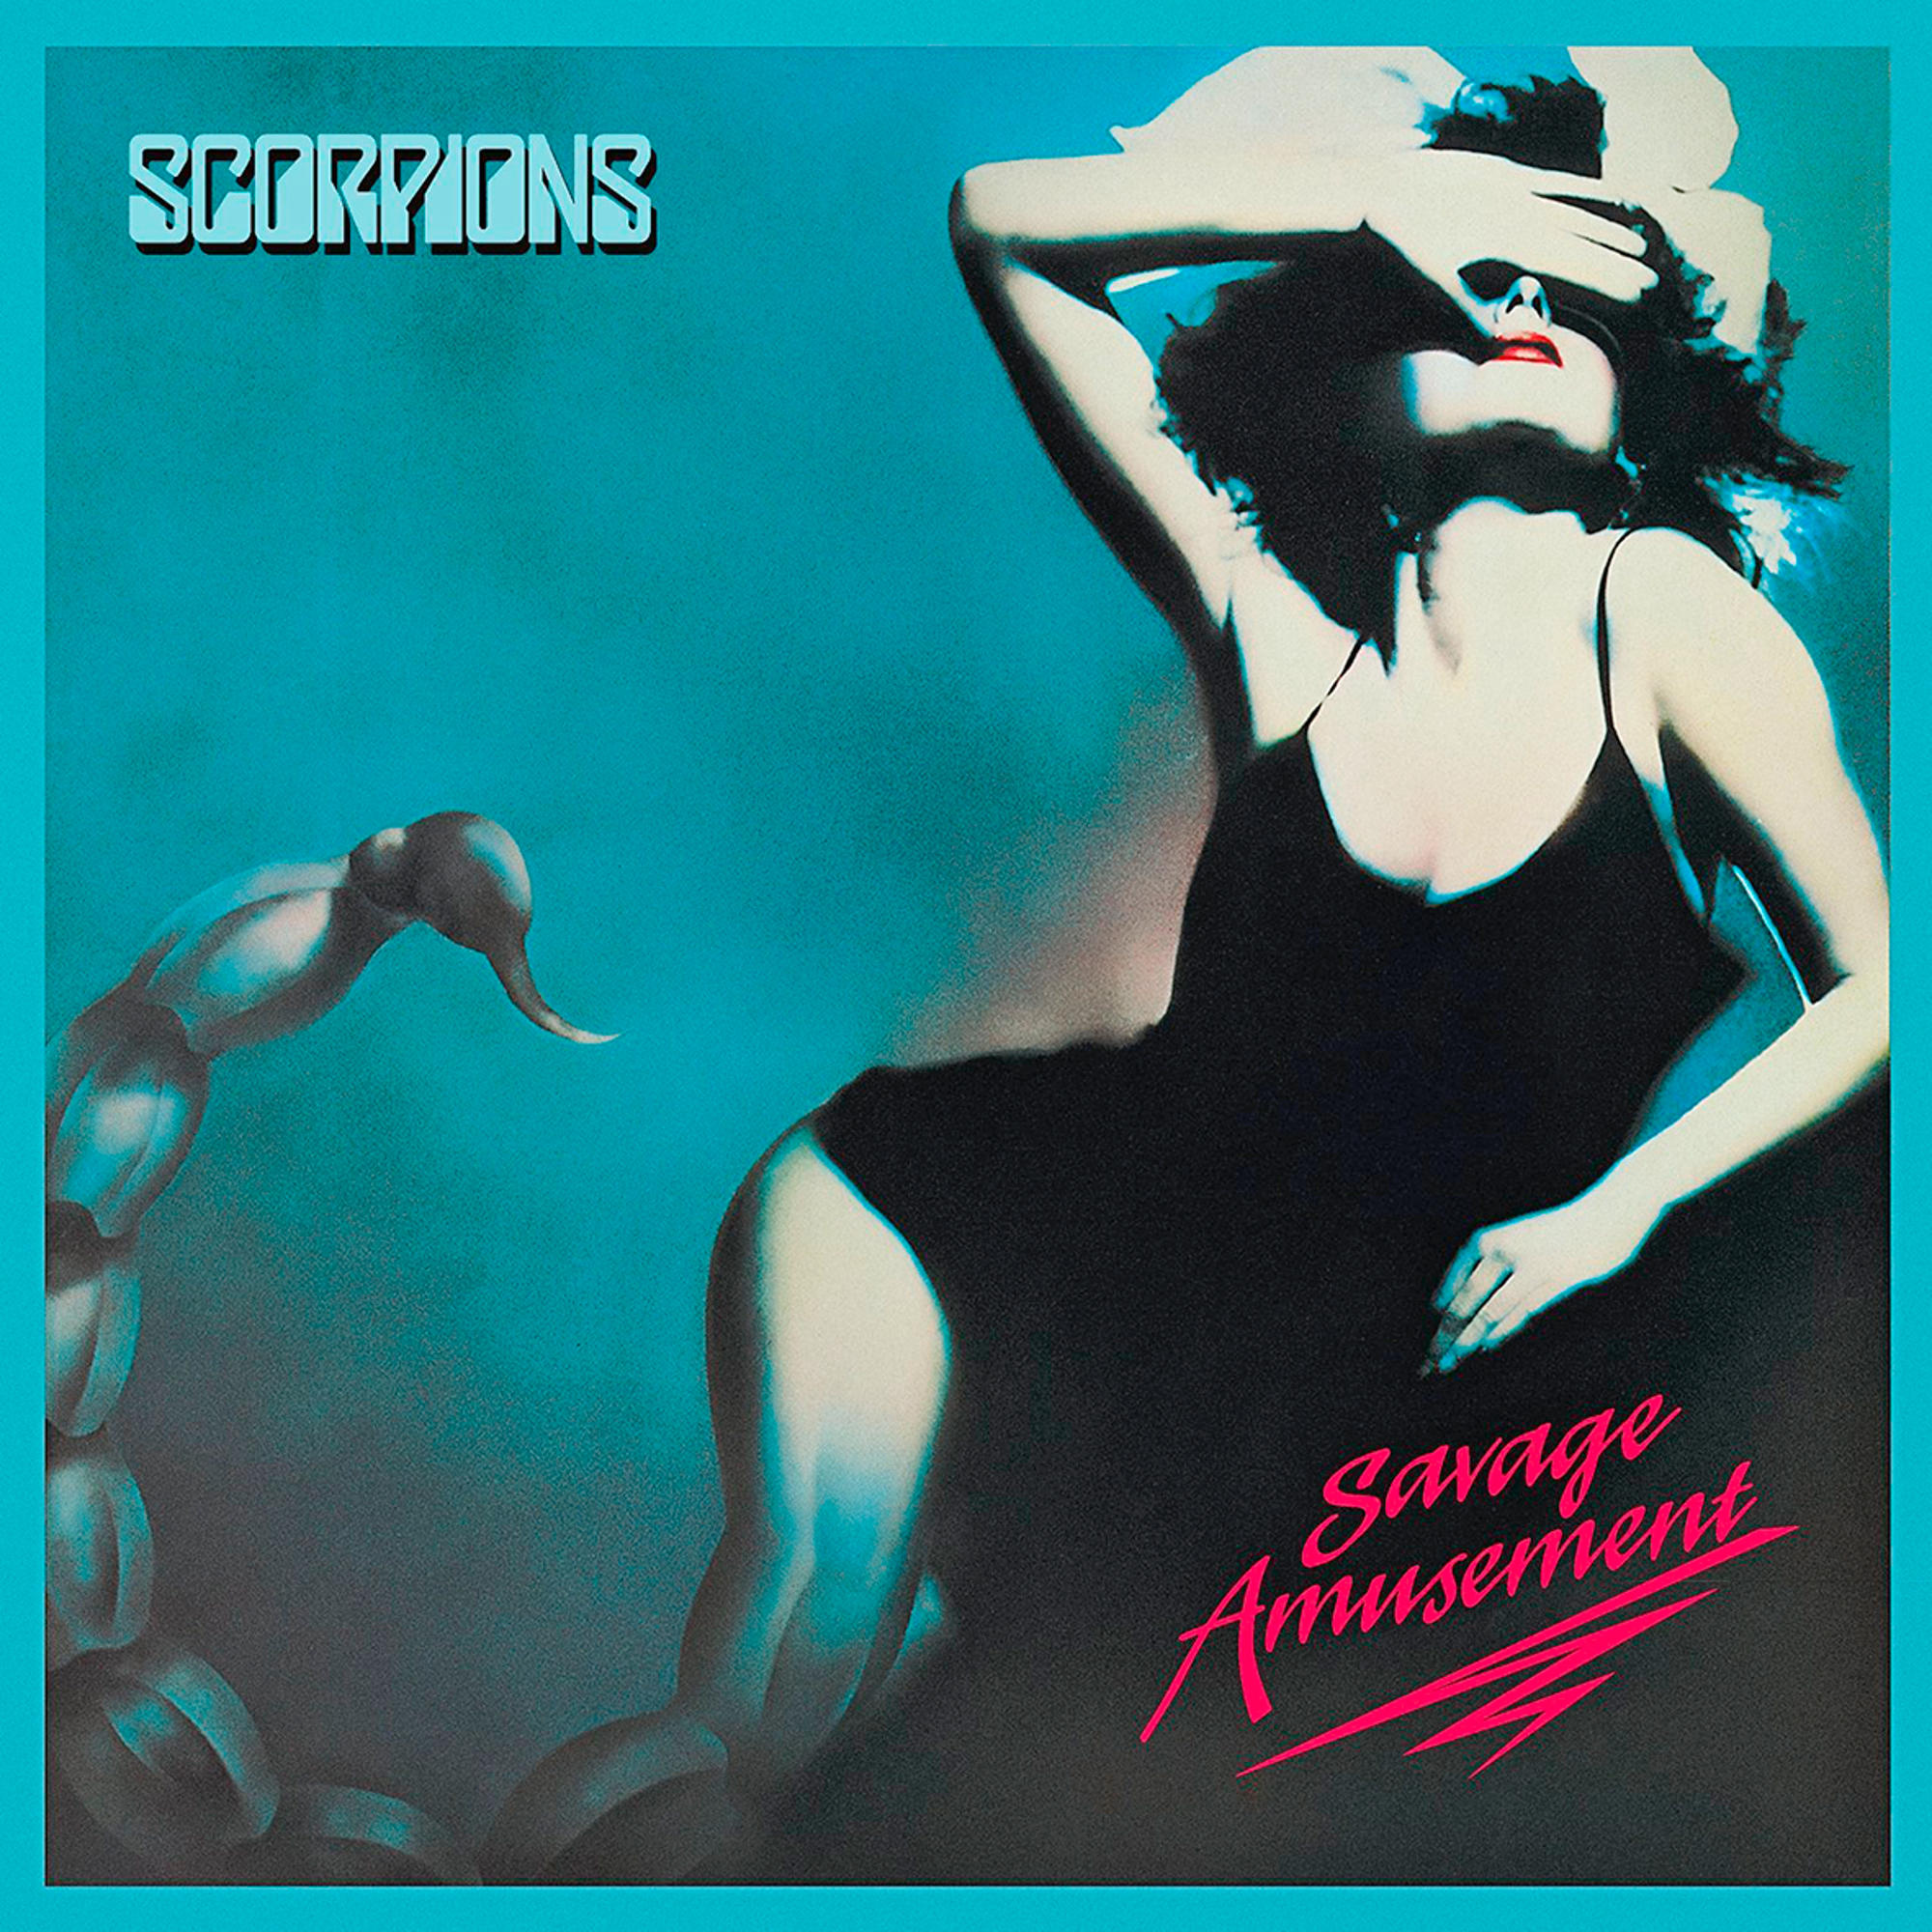 Scorpions - Edition) Amusement - Video) Deluxe + DVD (CD Savage Anniversary (50th